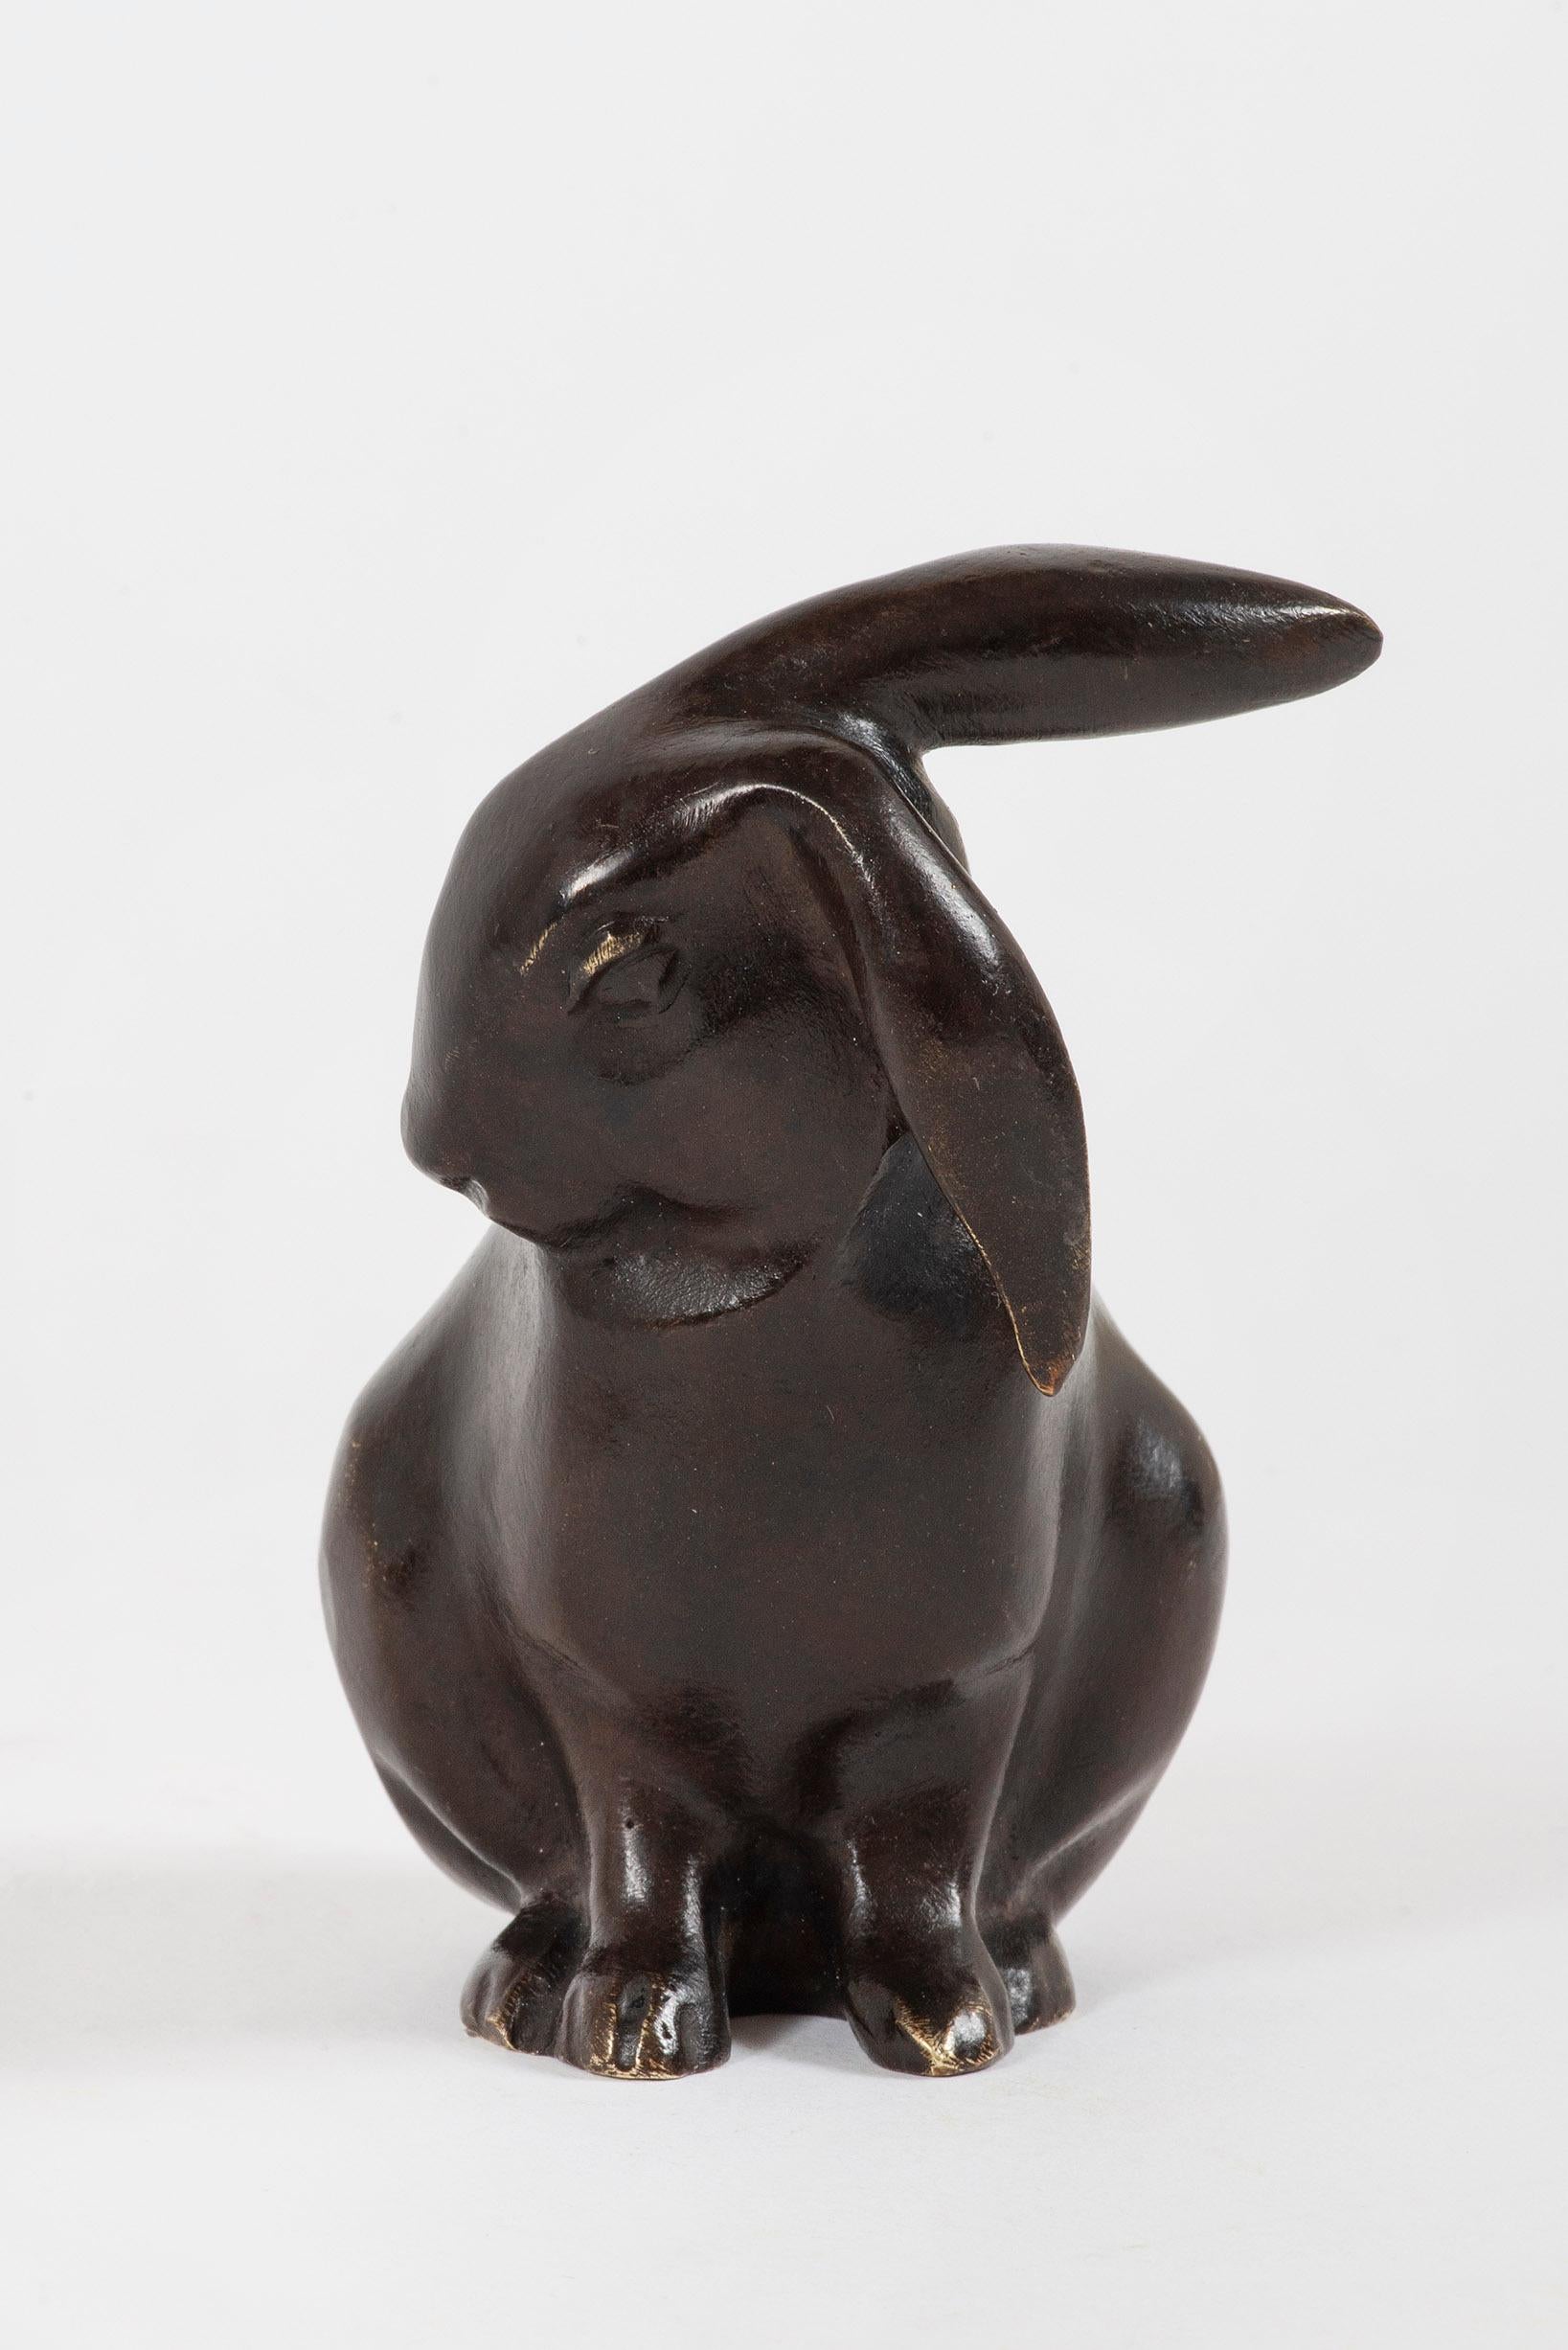 Edouard-Marcel Sandoz Figurative Sculpture - Lapin assis, sitted rabbit, Sandoz, sculpture, Animal, Bronze, 20's century